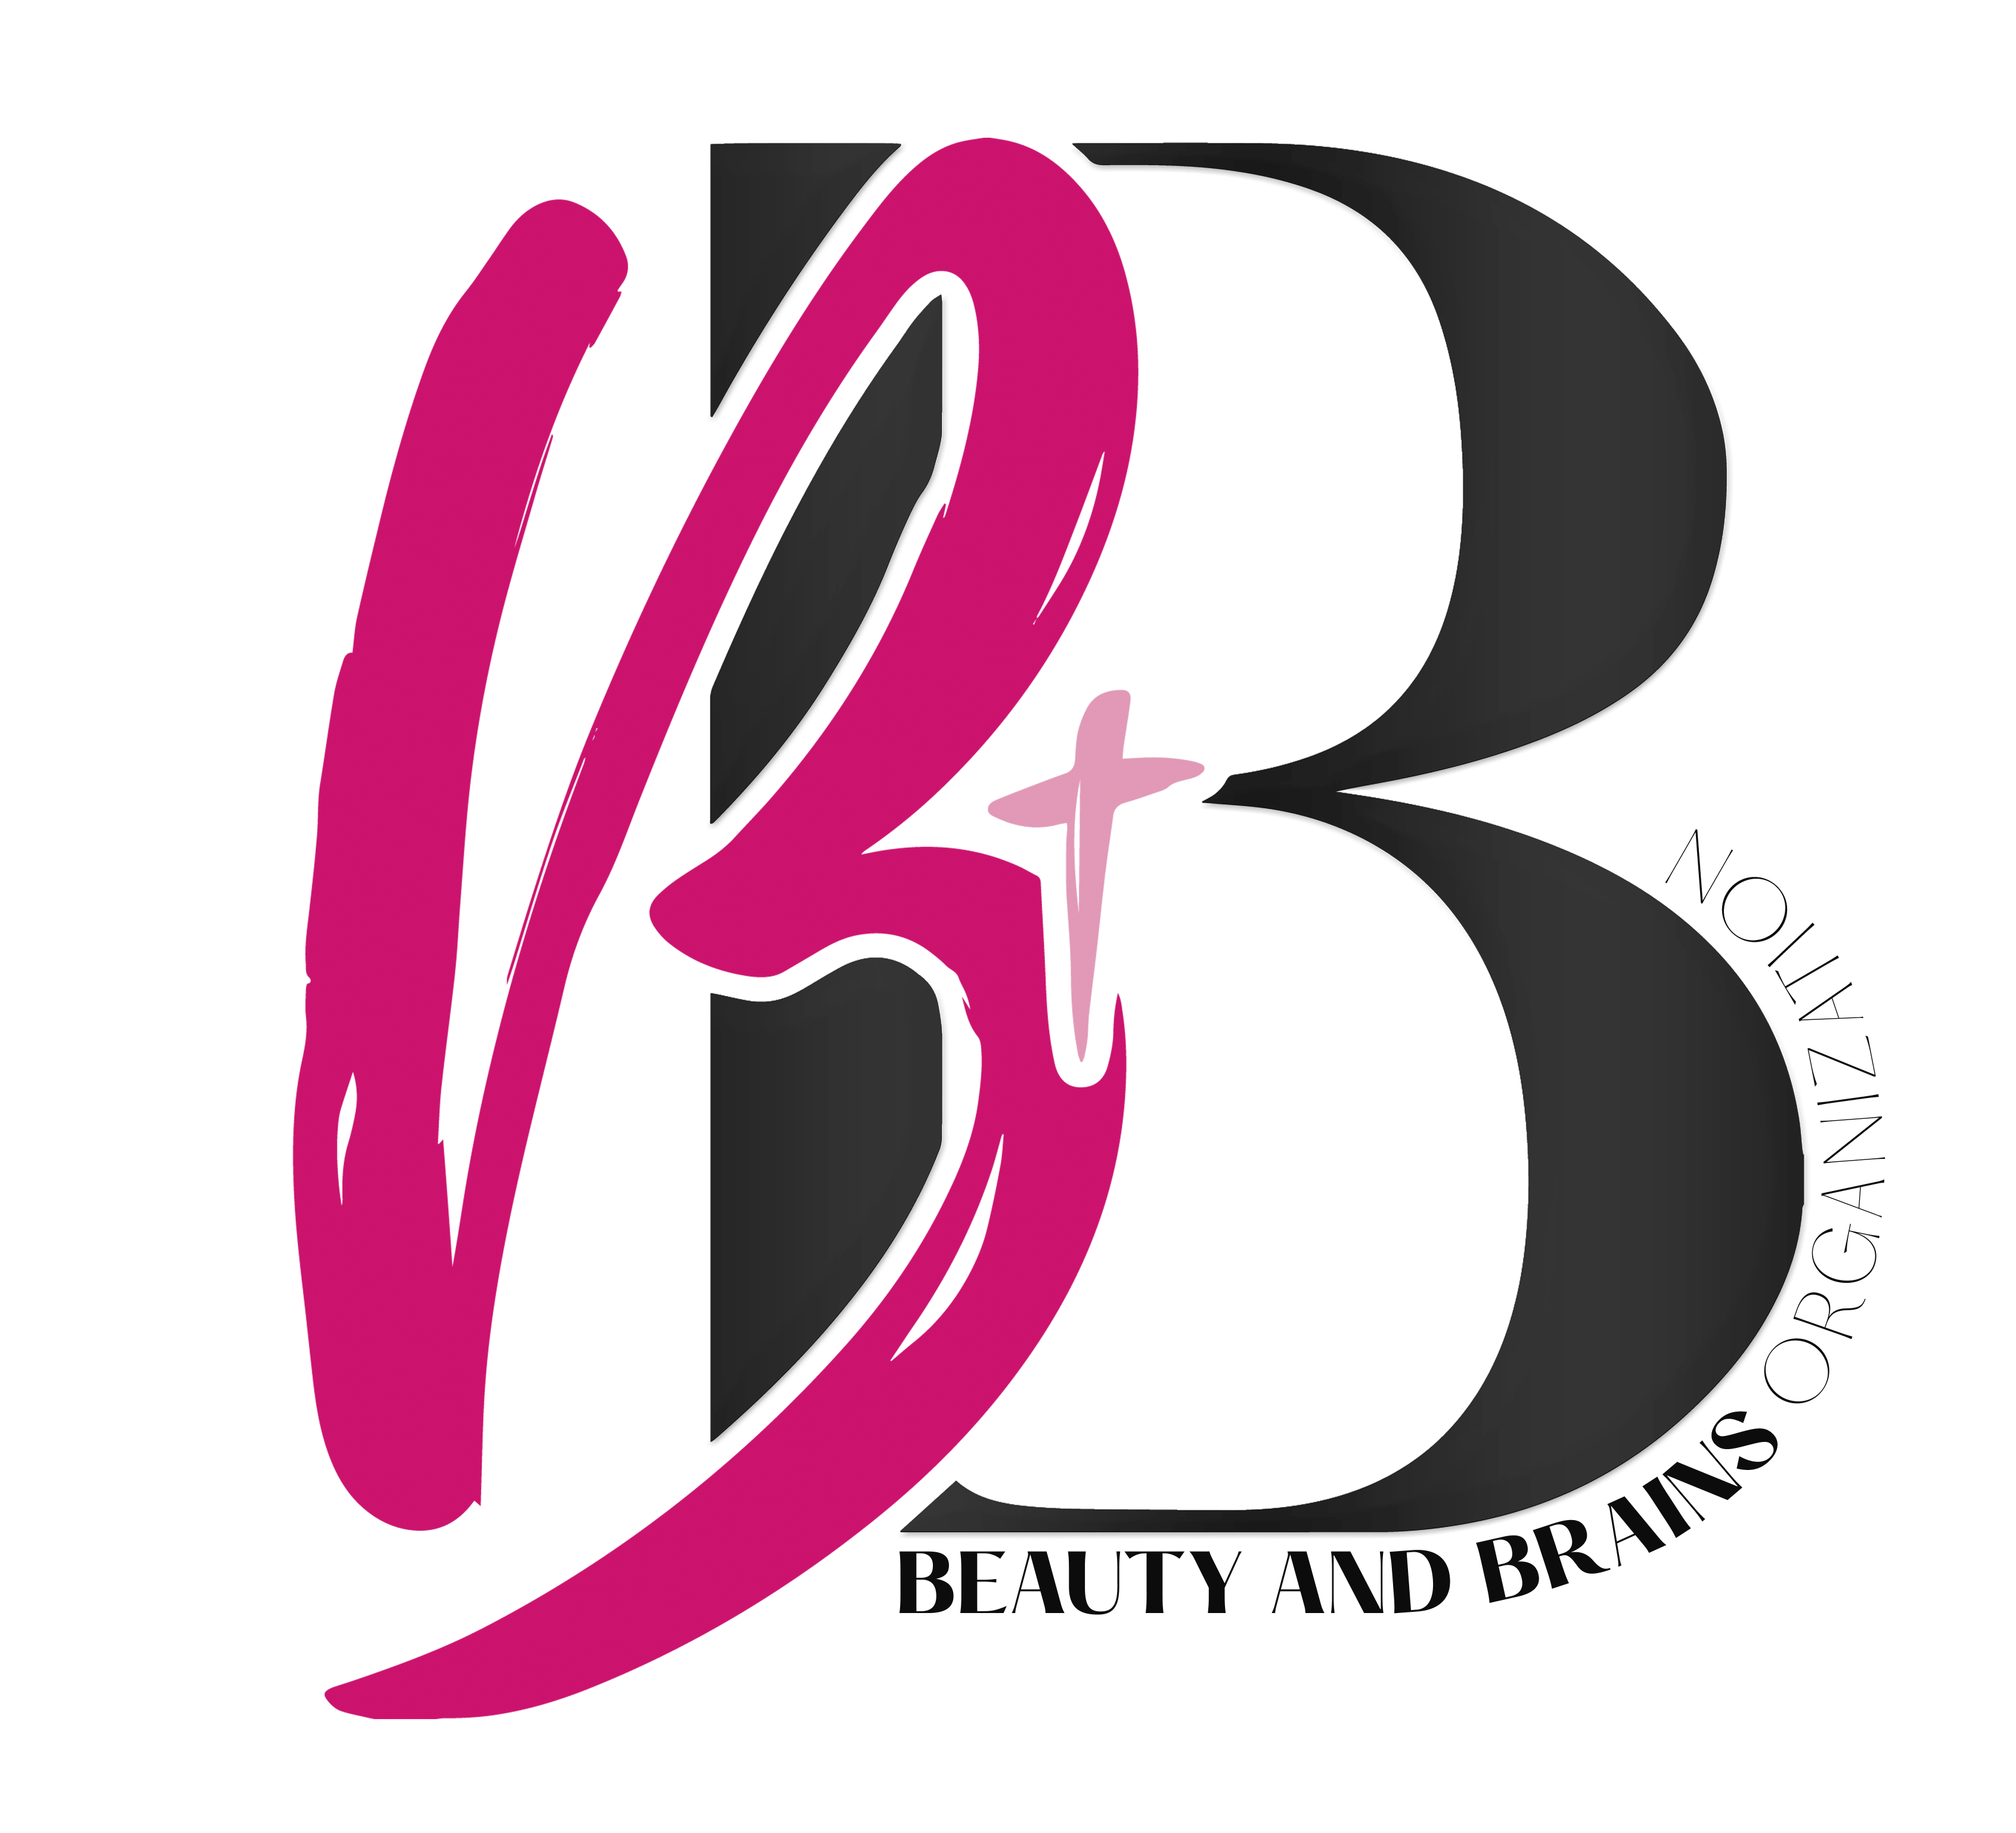 Beauty and Brains Organization logo